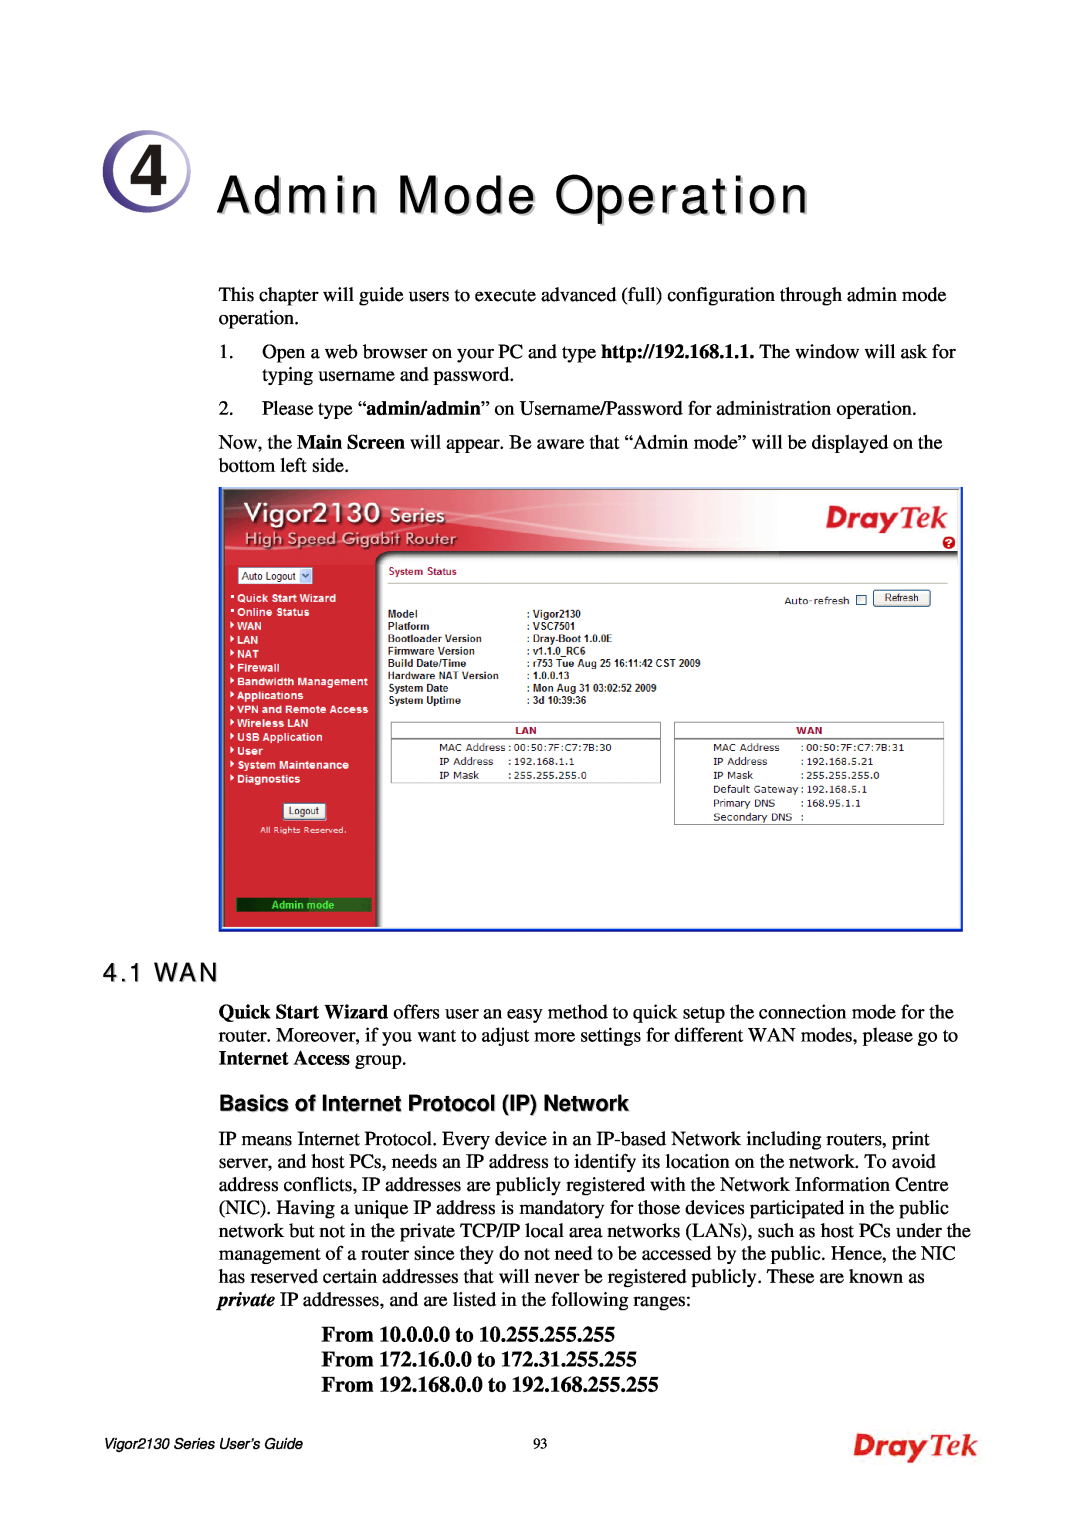 Draytek 2130 manual Admin Mode Operation, 4.1 WAN, Basics of Internet Protocol IP Network 